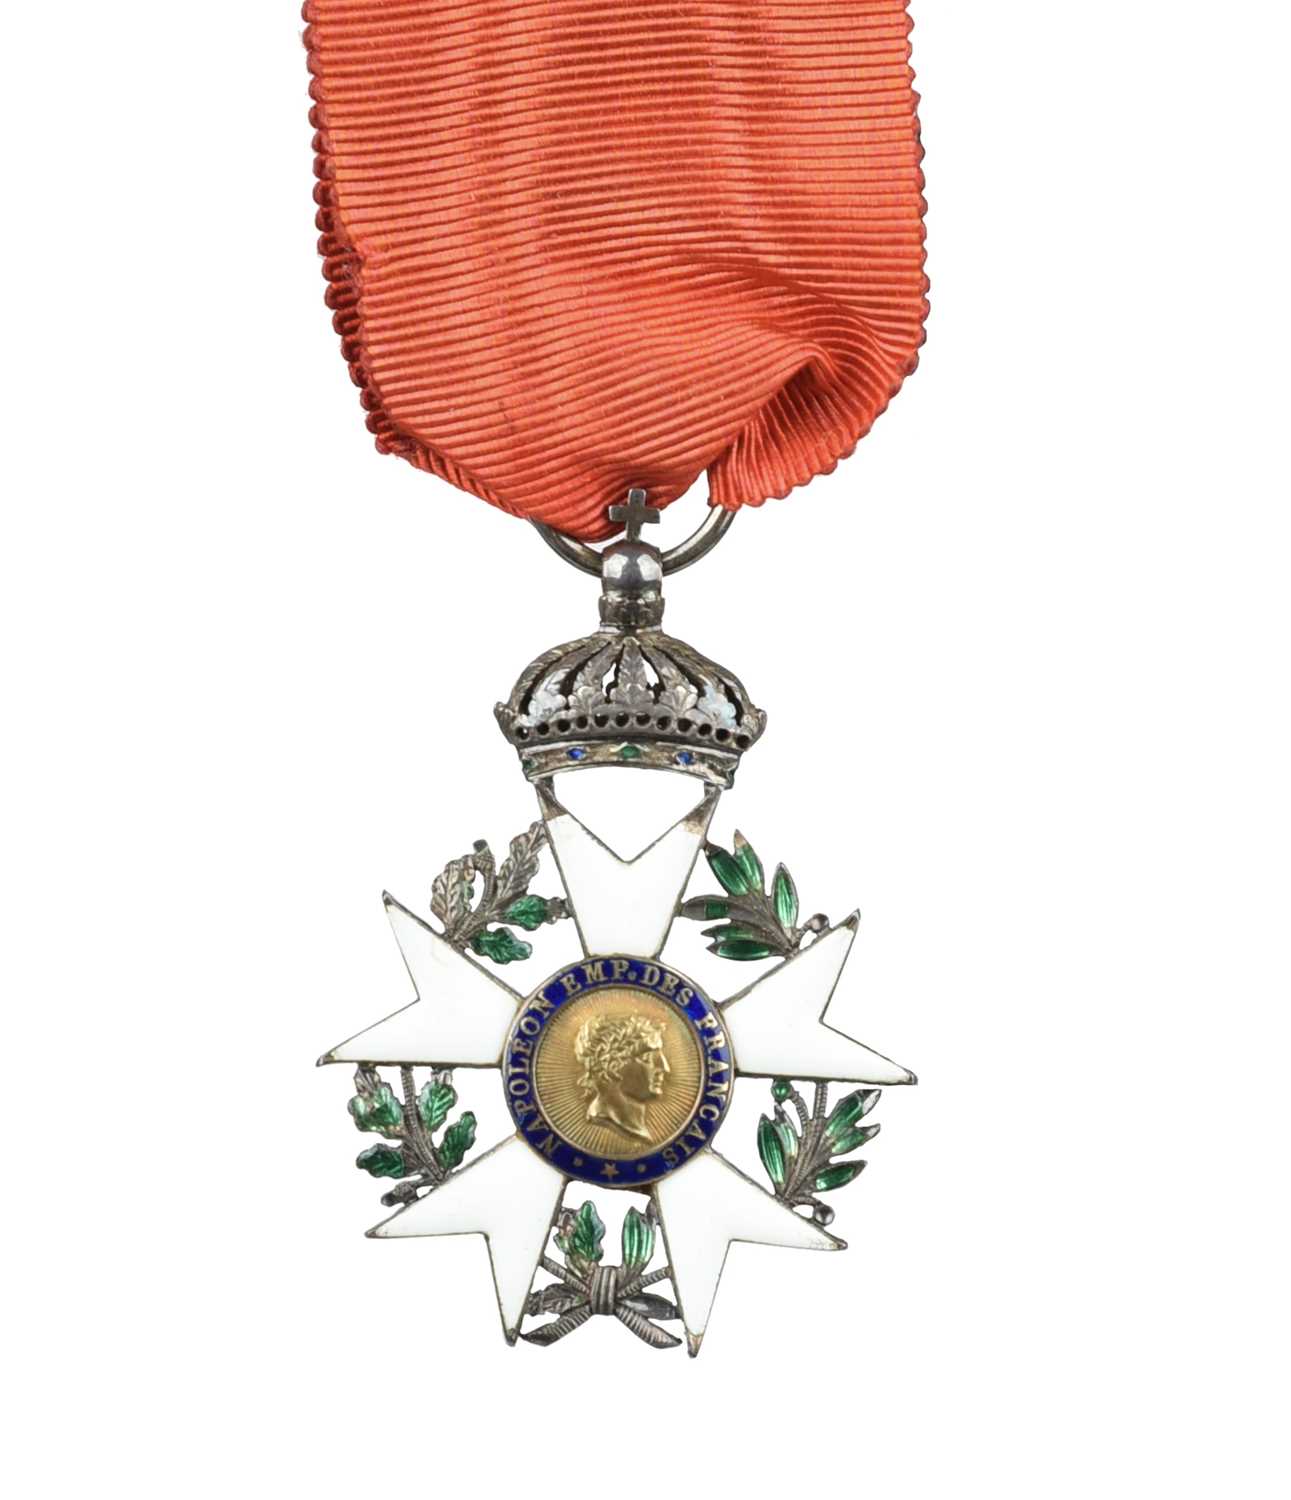 France- First Empire: Ordre de la Légion d'honneur, officer's breast badge, some loss and damage